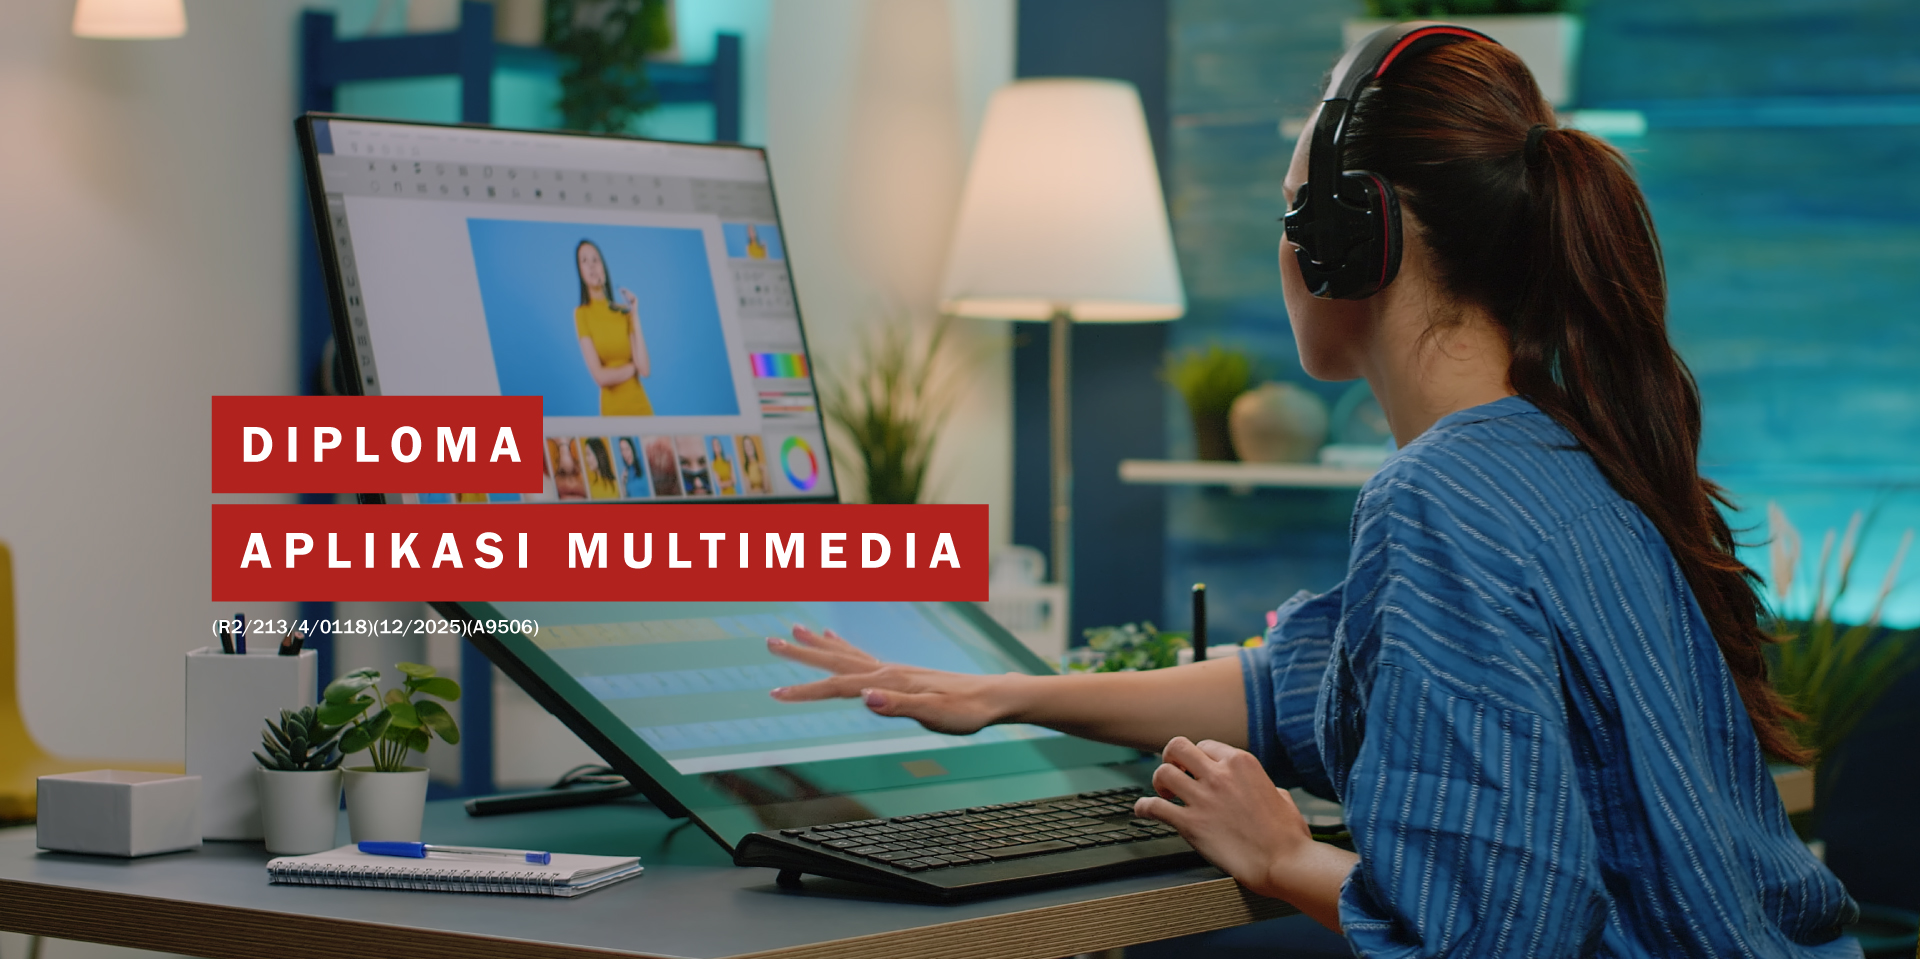 Diploma in Multimedia Application Malaysia | KLMUC